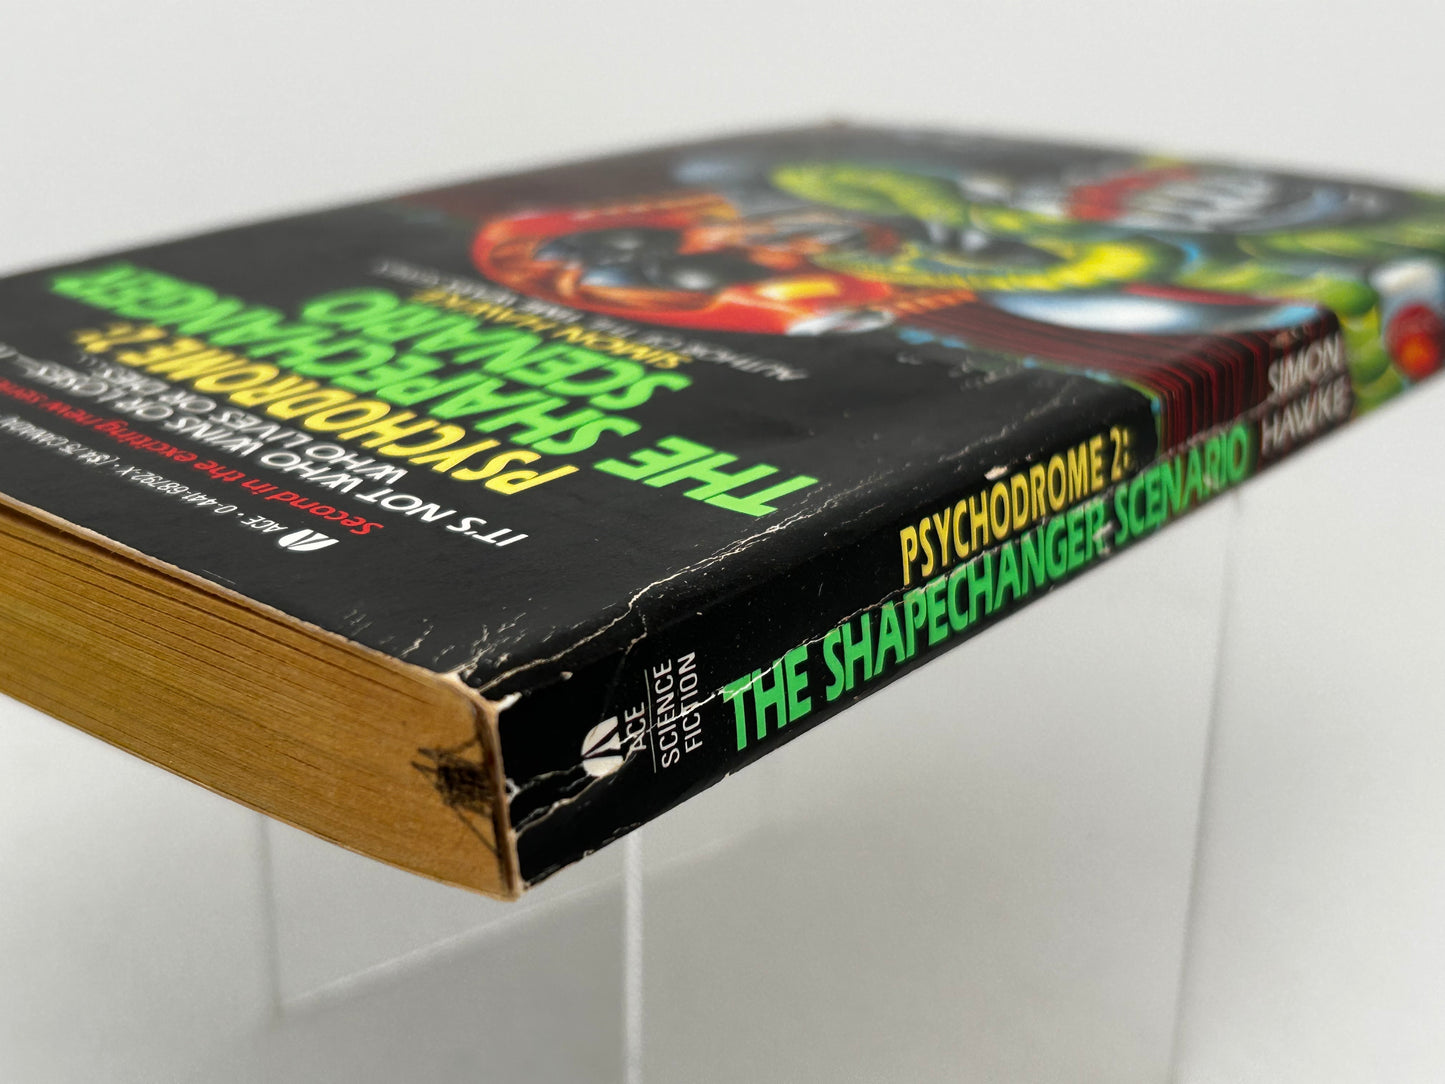 Psychodrome 2: The Shapechanger Scenario ACE Paperback Simon Hawke SF11